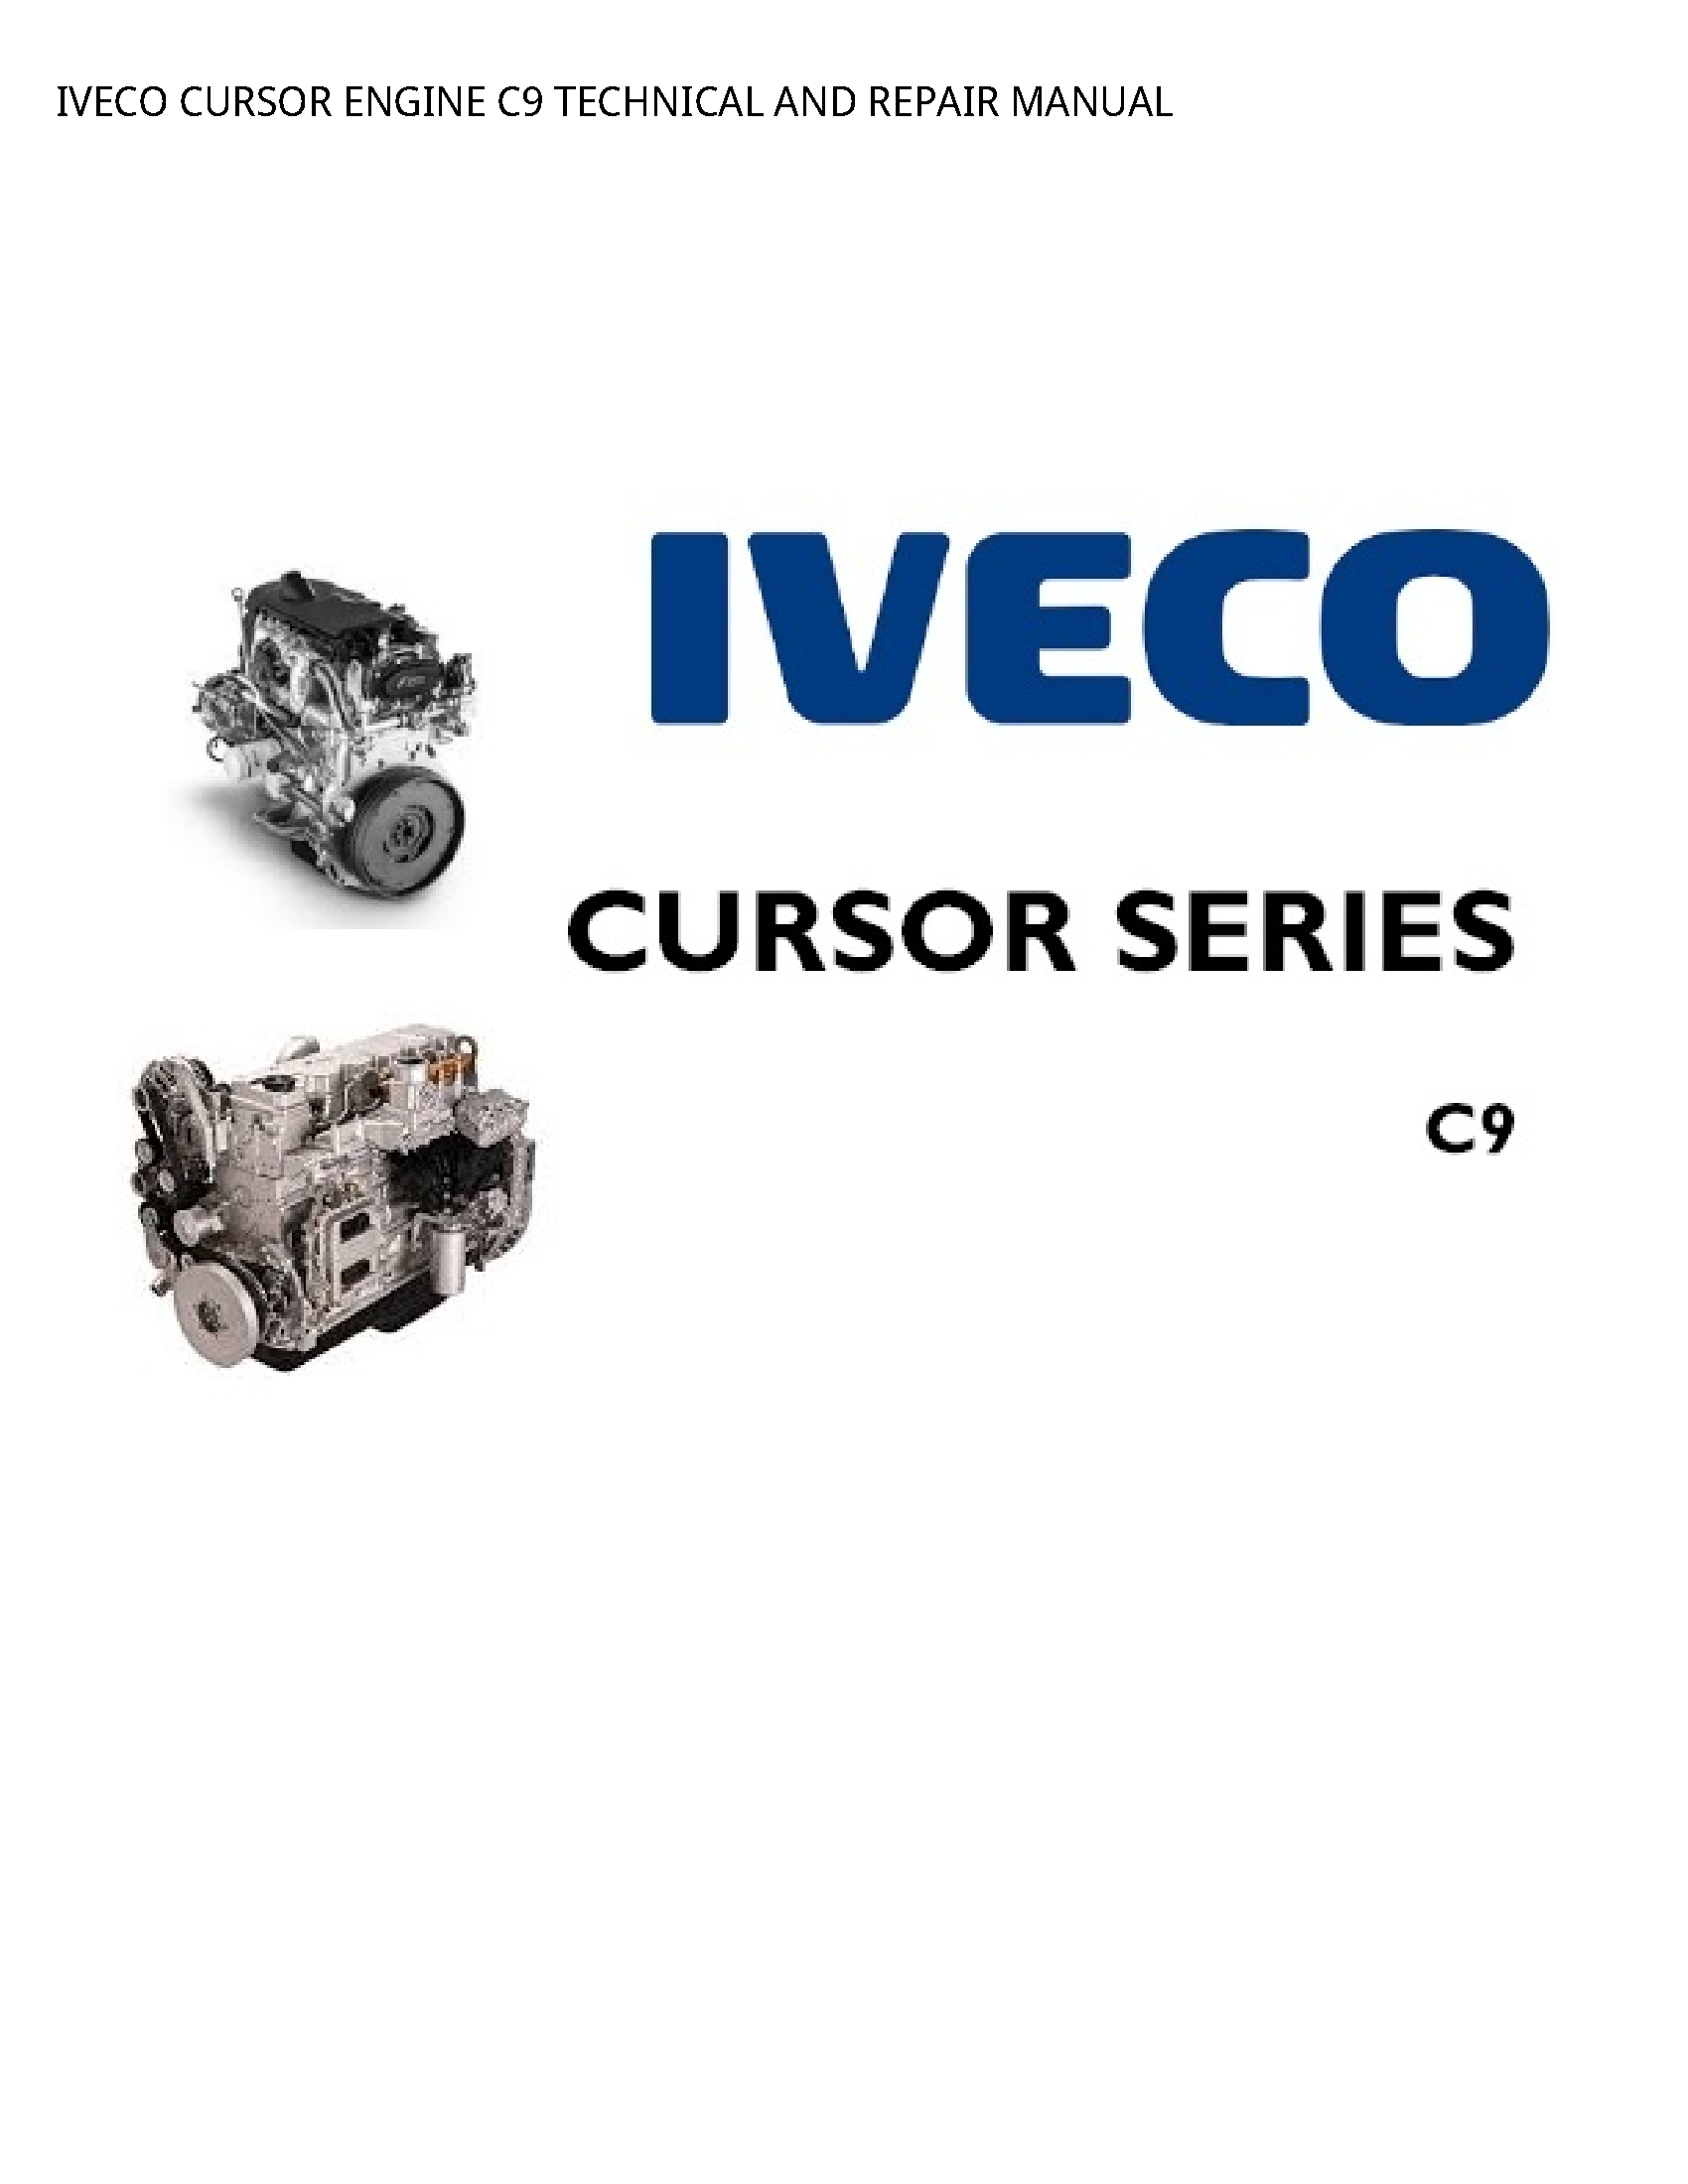 Iveco C9 CURSOR ENGINE TECHNICAL AND REPAIR manual